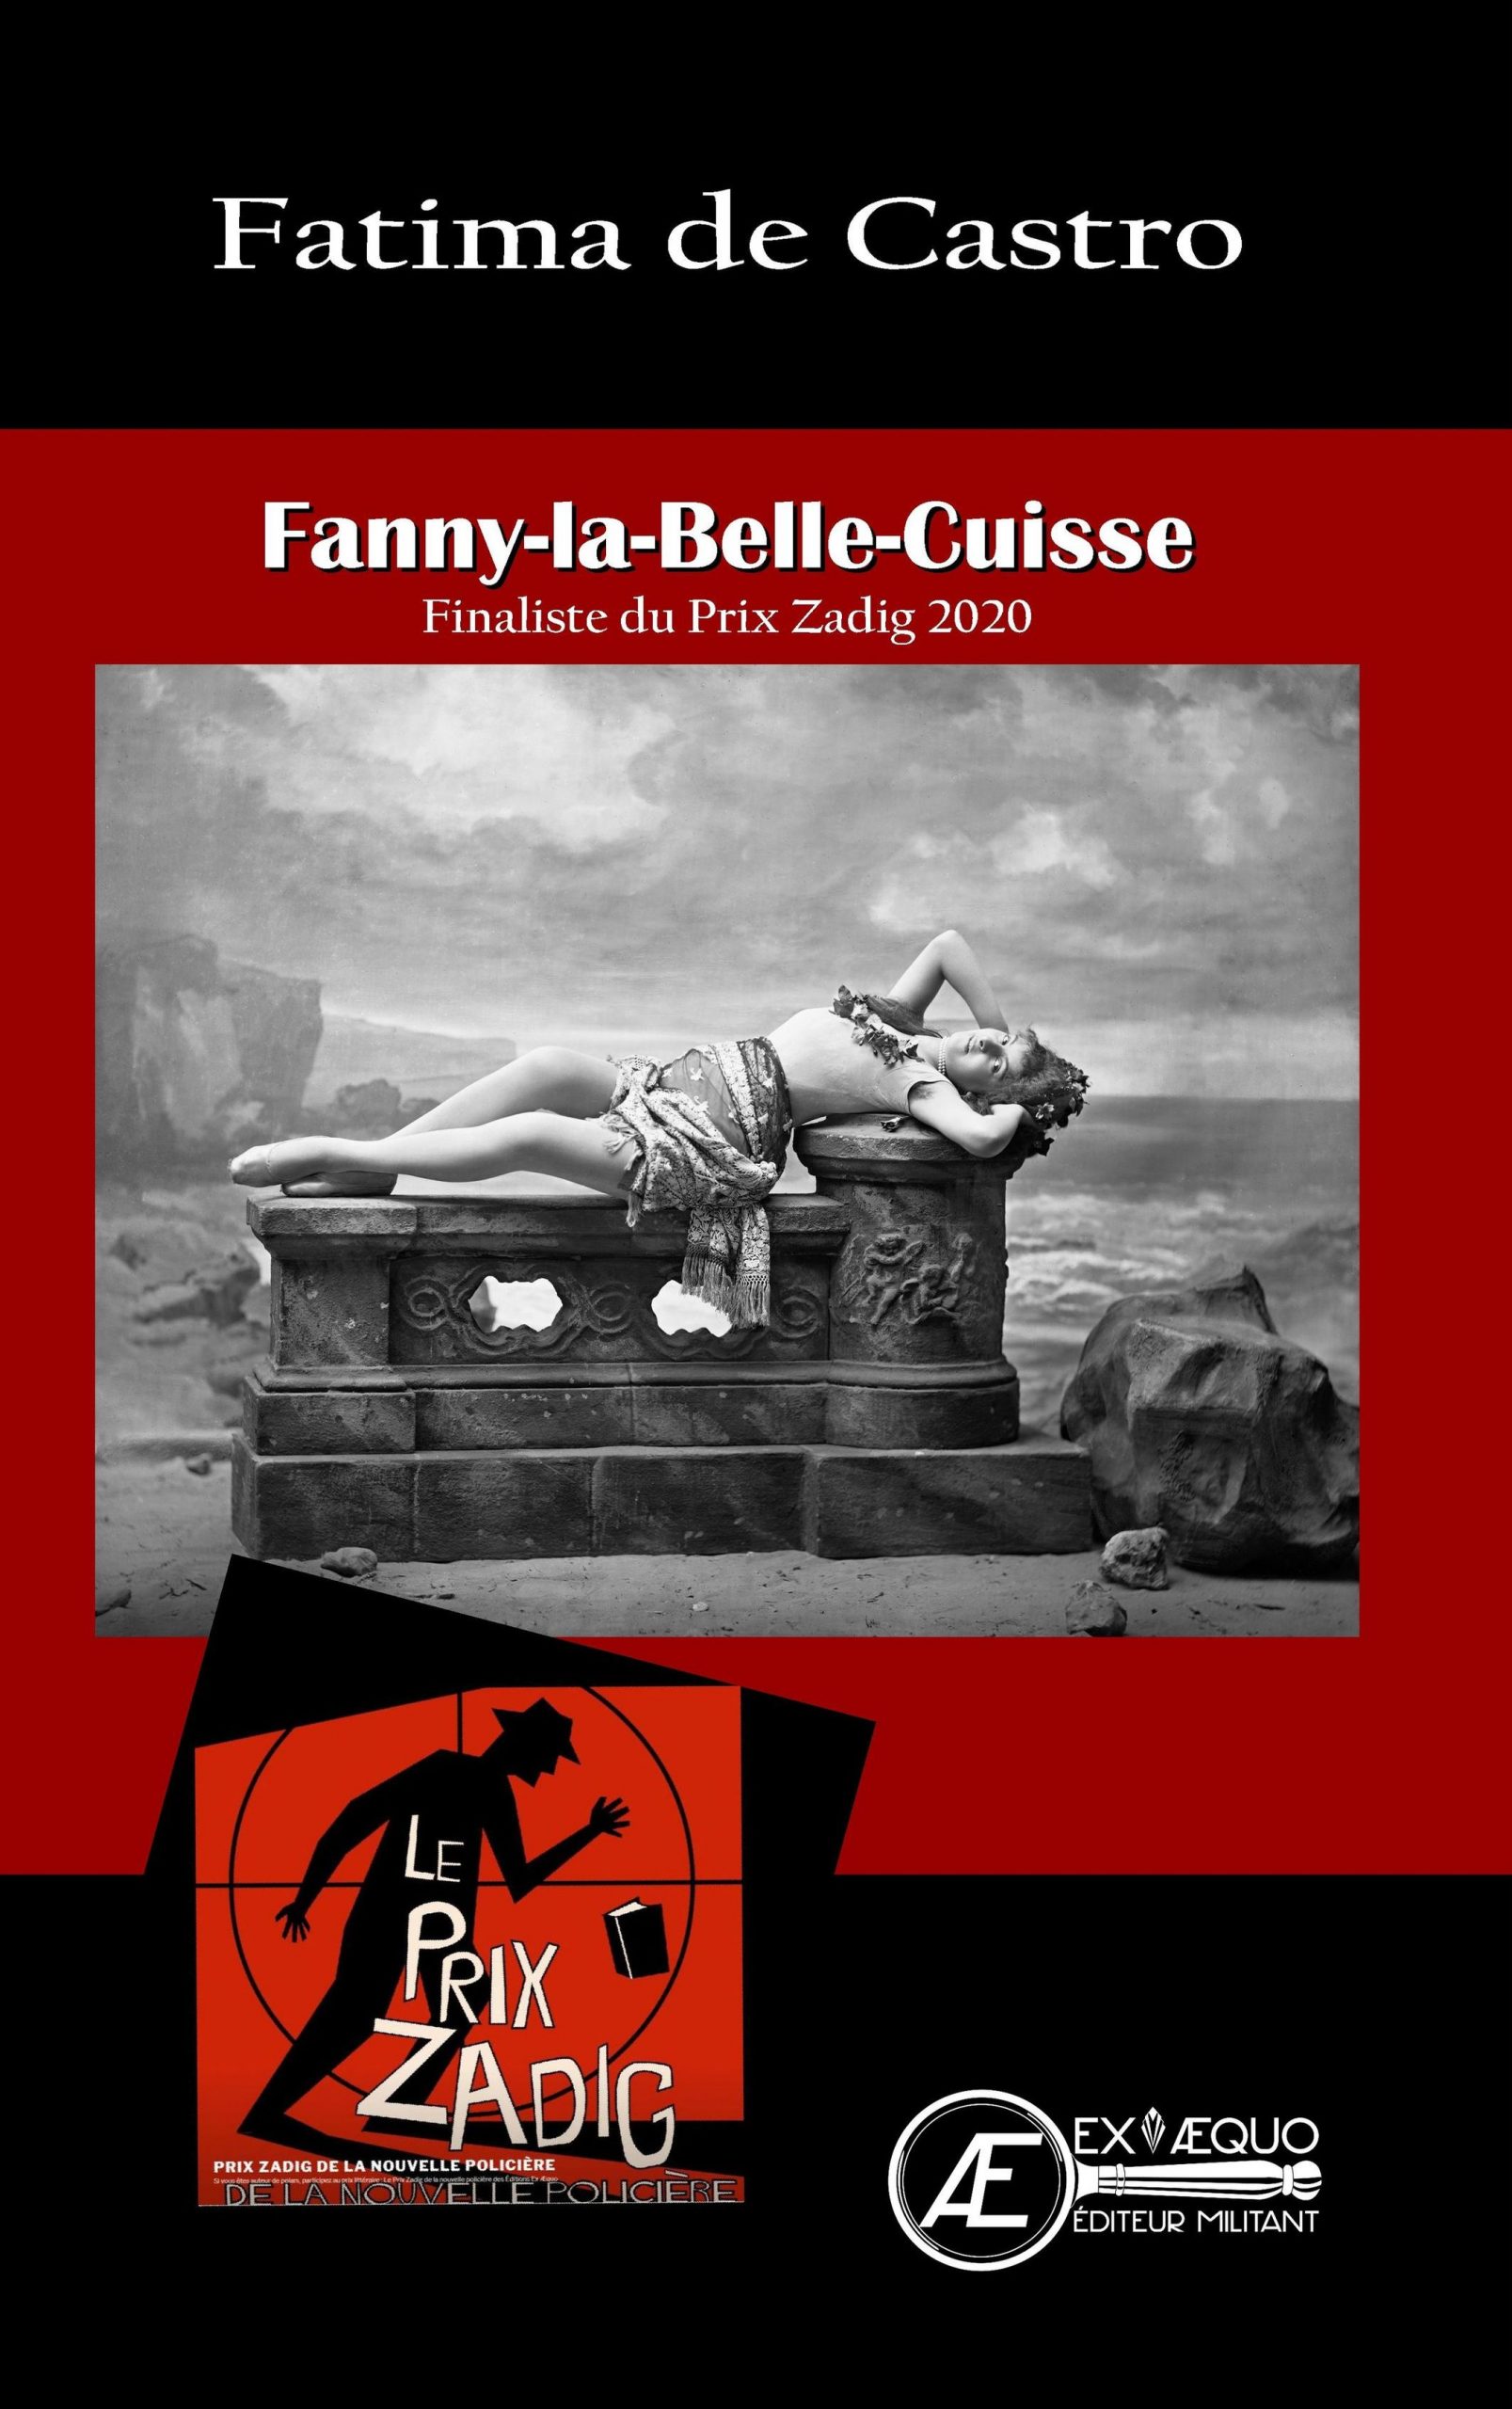 You are currently viewing Fanny la belle cuisse, de Fatima de Castro